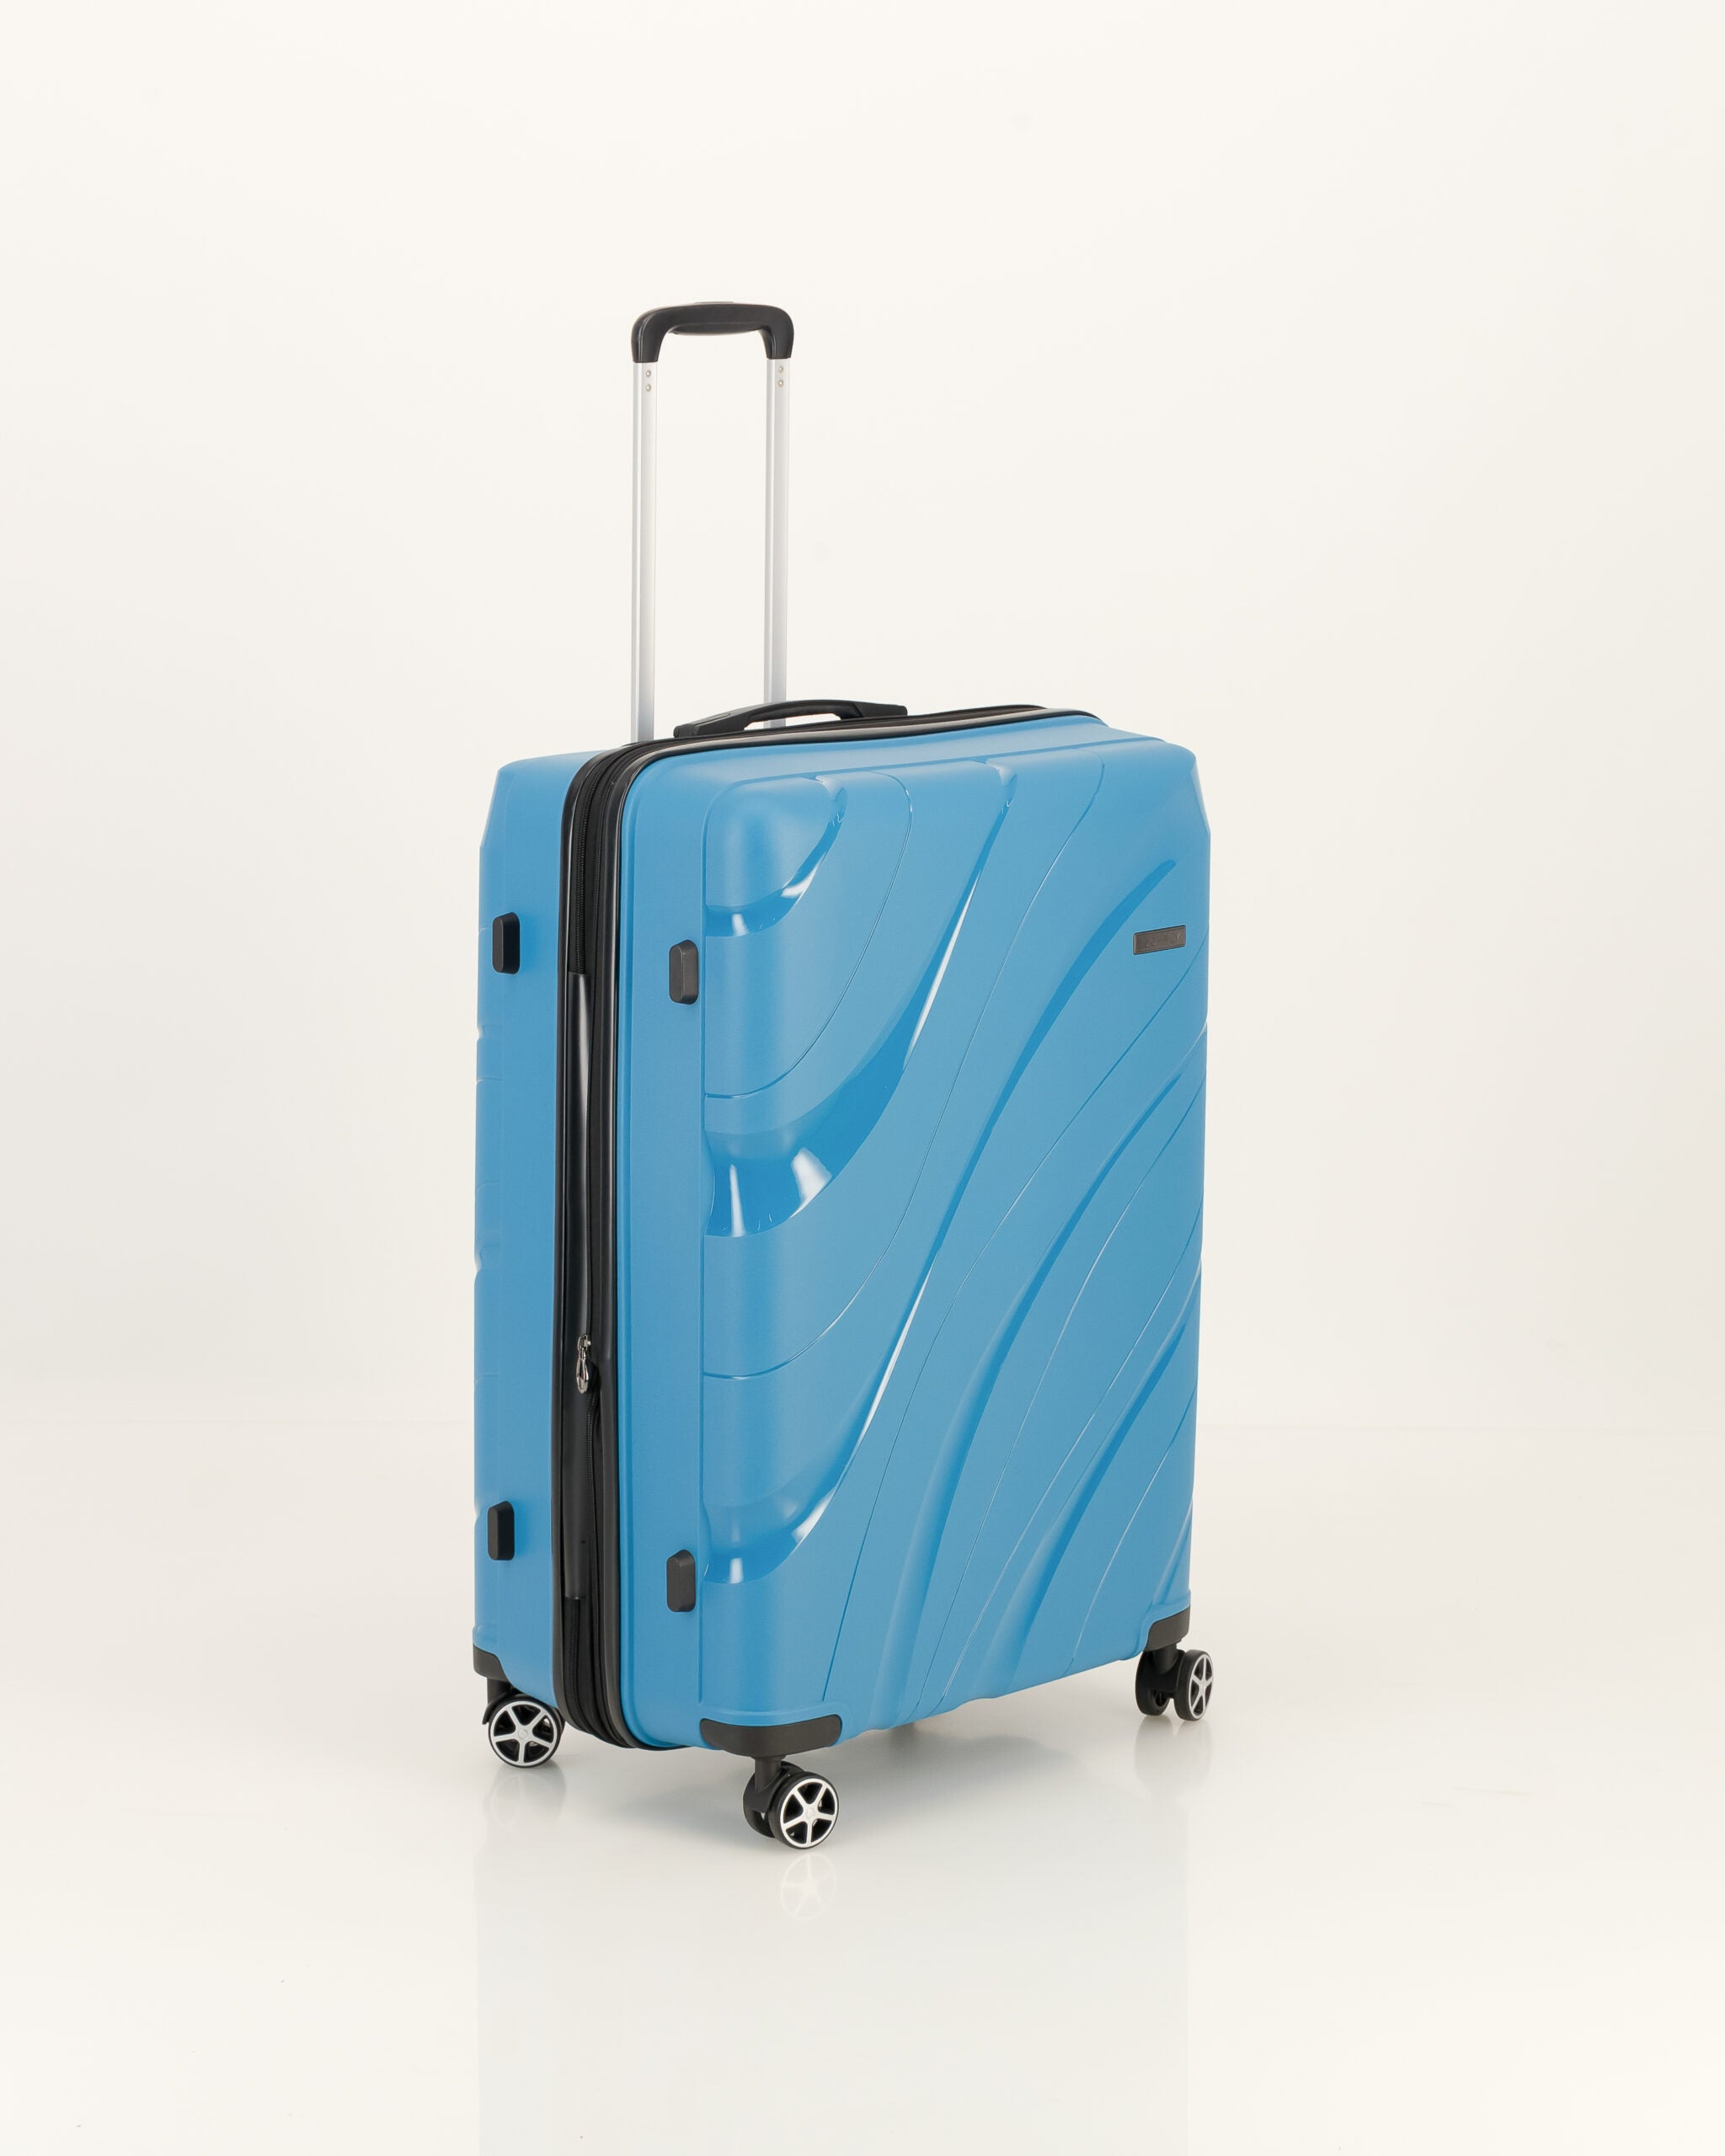 So-Fly Orbit 75cm Spinner Luggage